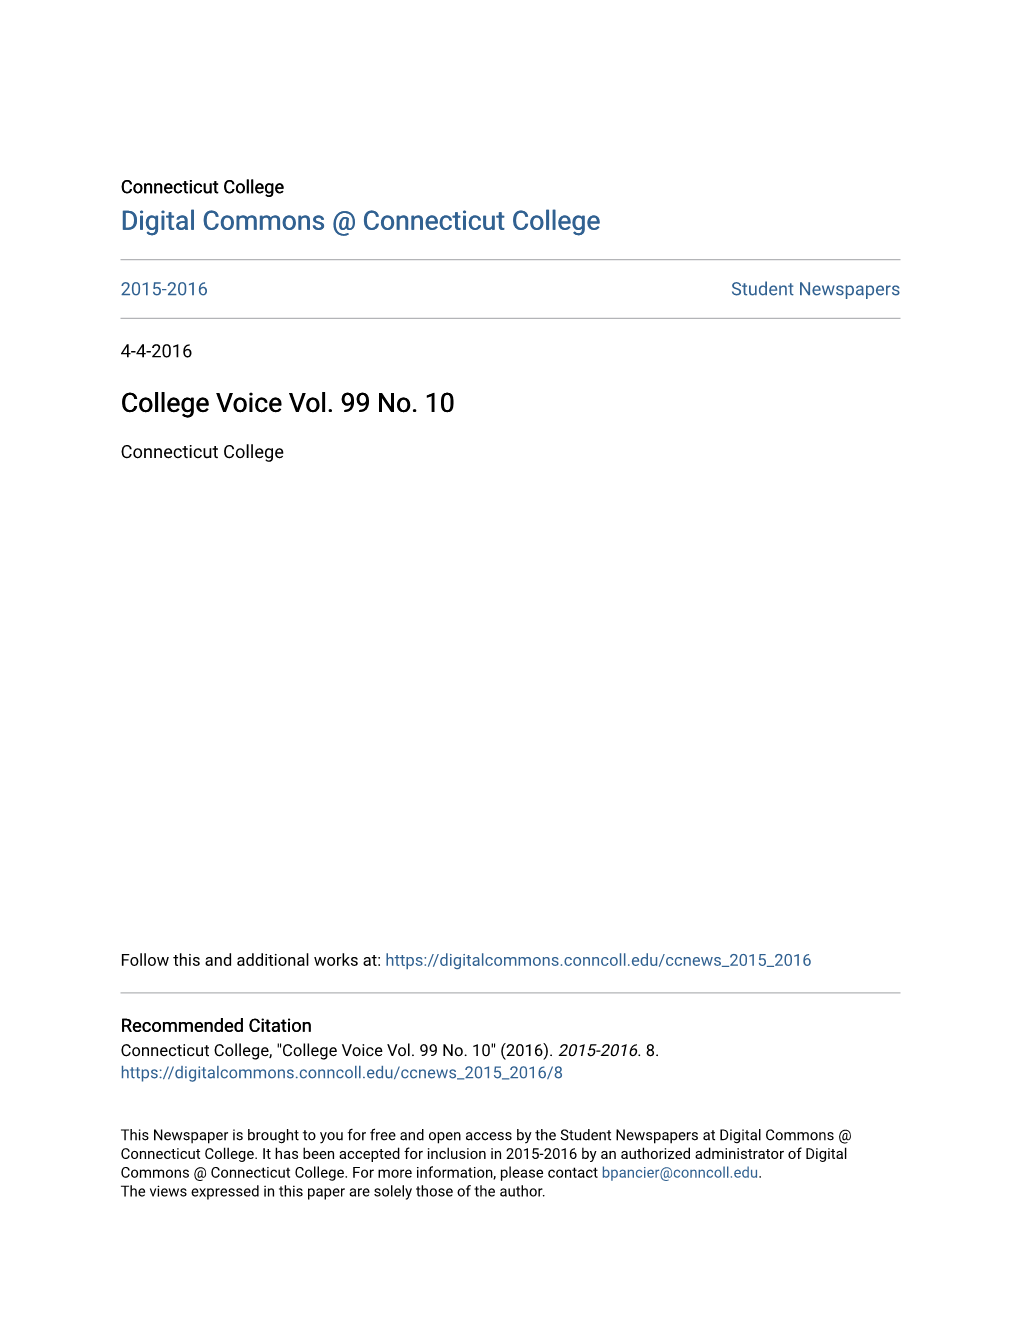 College Voice Vol. 99 No. 10